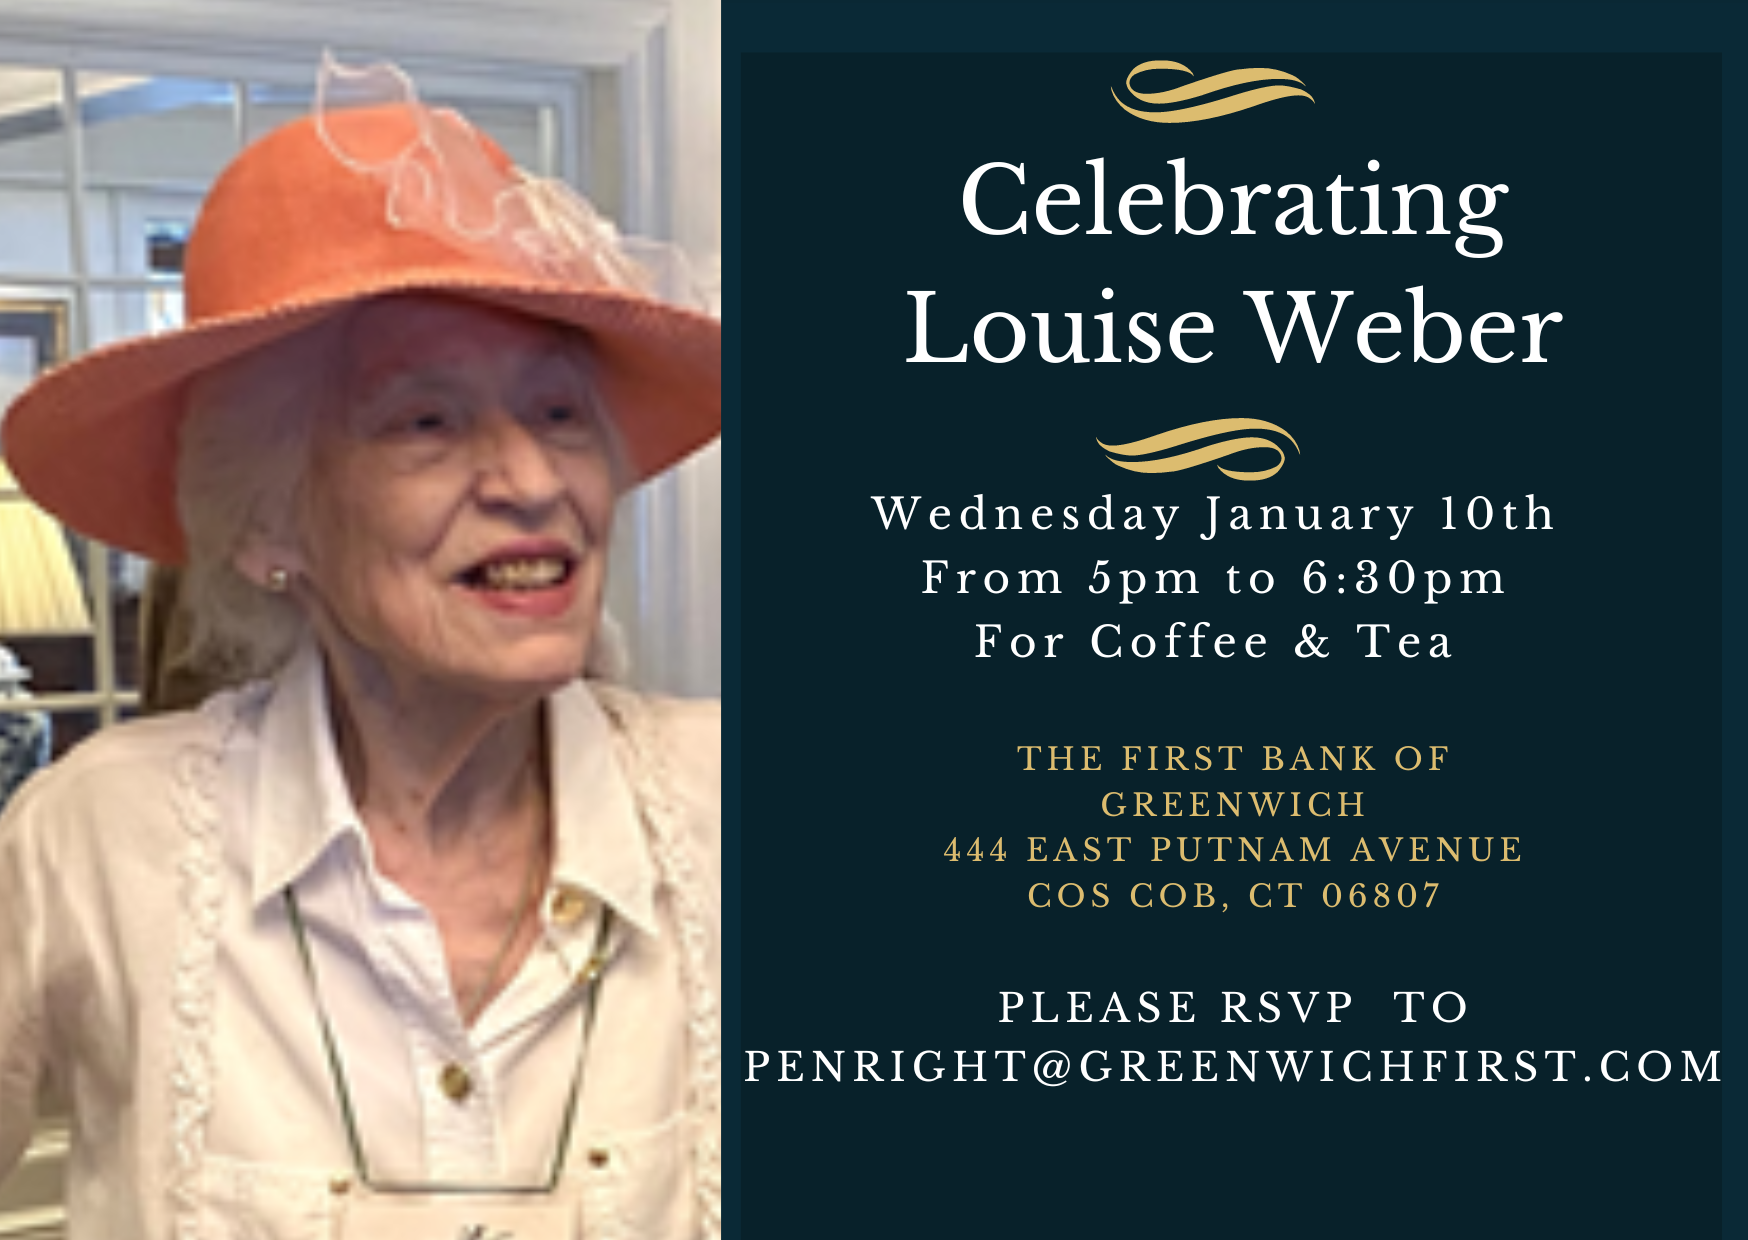 Celebrating Louise Weber Event Invitation